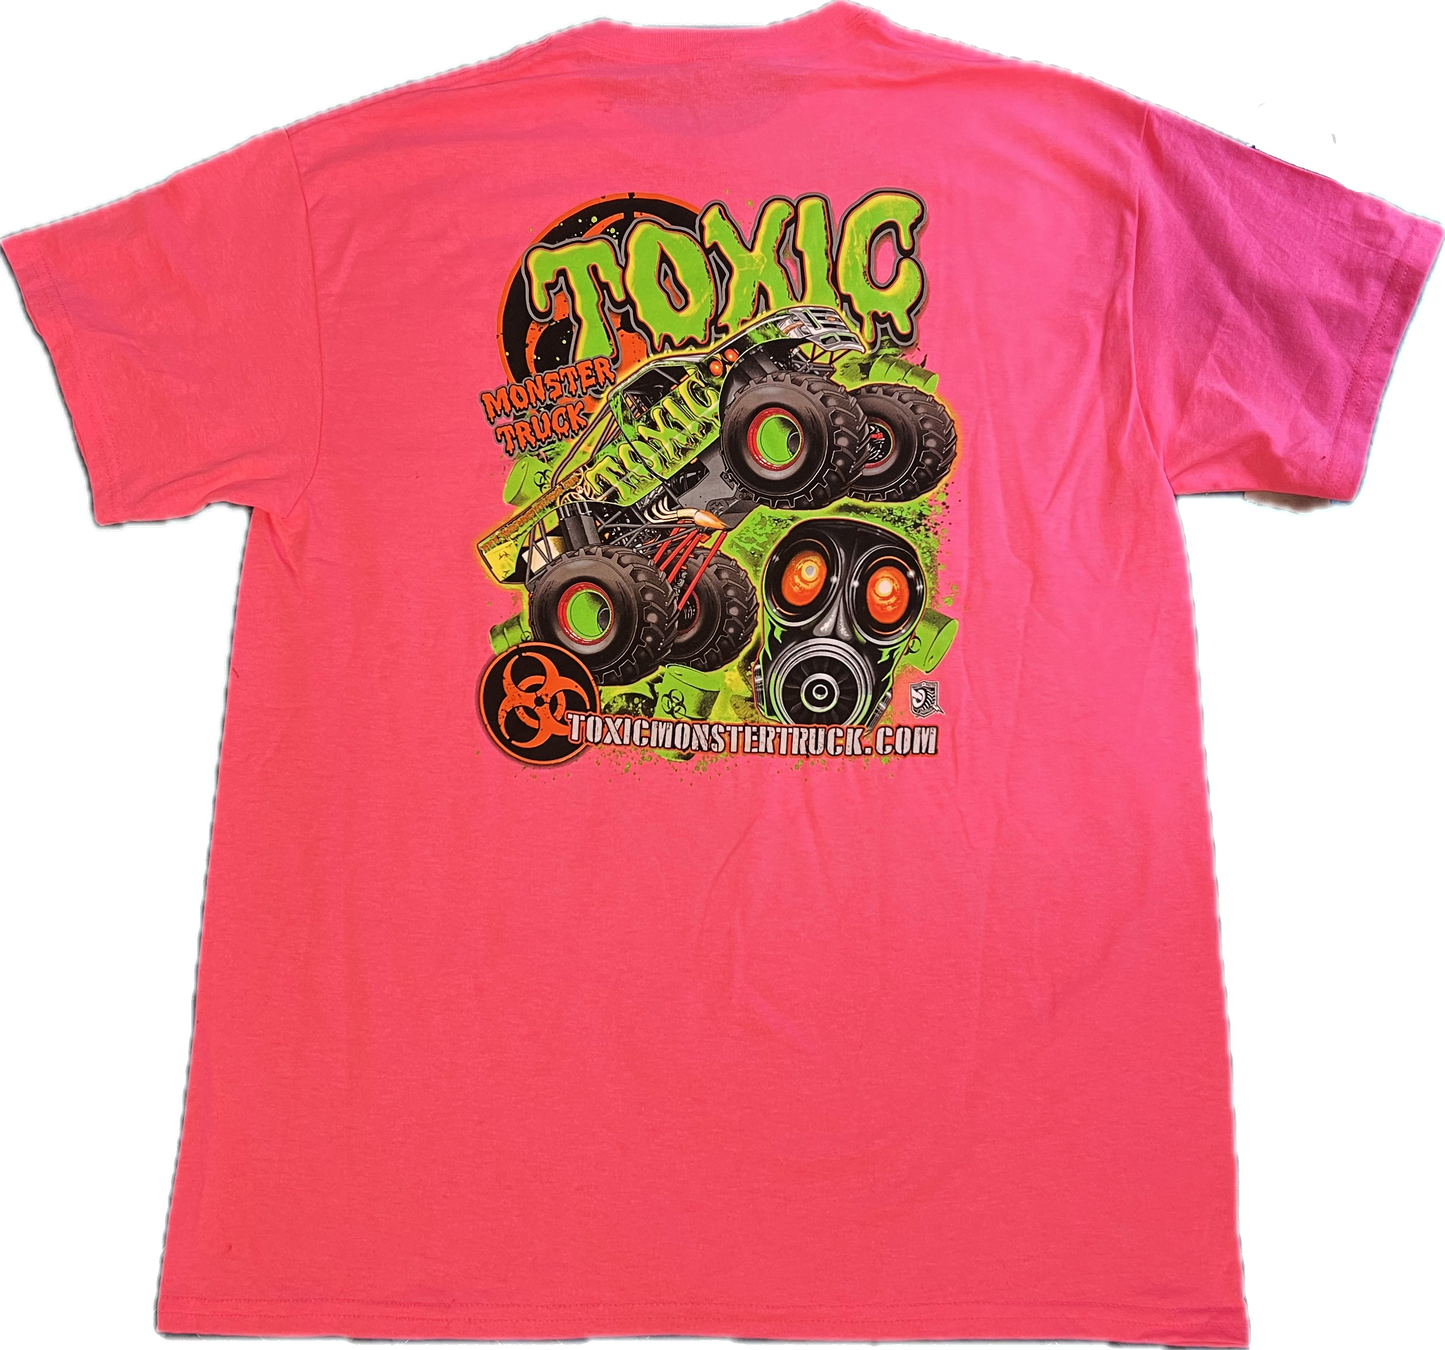 Toxic T-Shirt - Adult Bright Pink